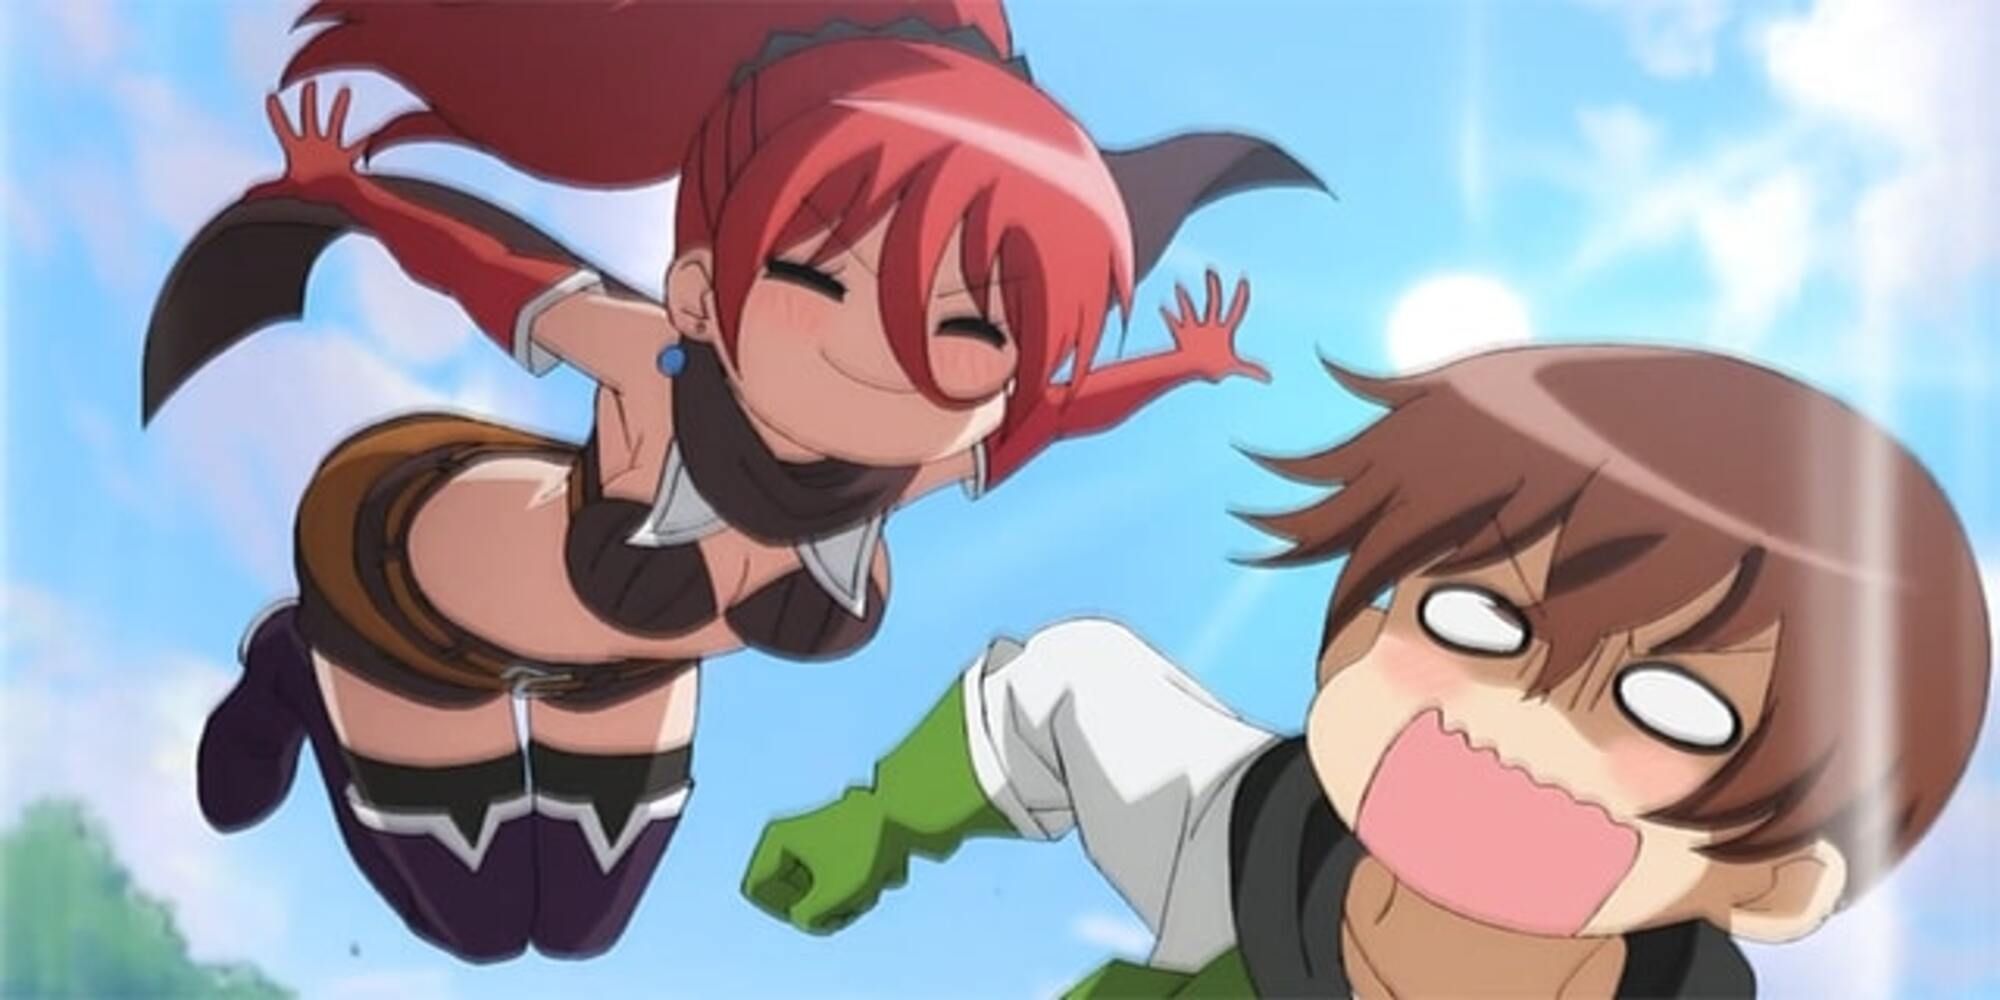 Maya smiles and jumps towards her brother, Asahi, as he screams and runs away.